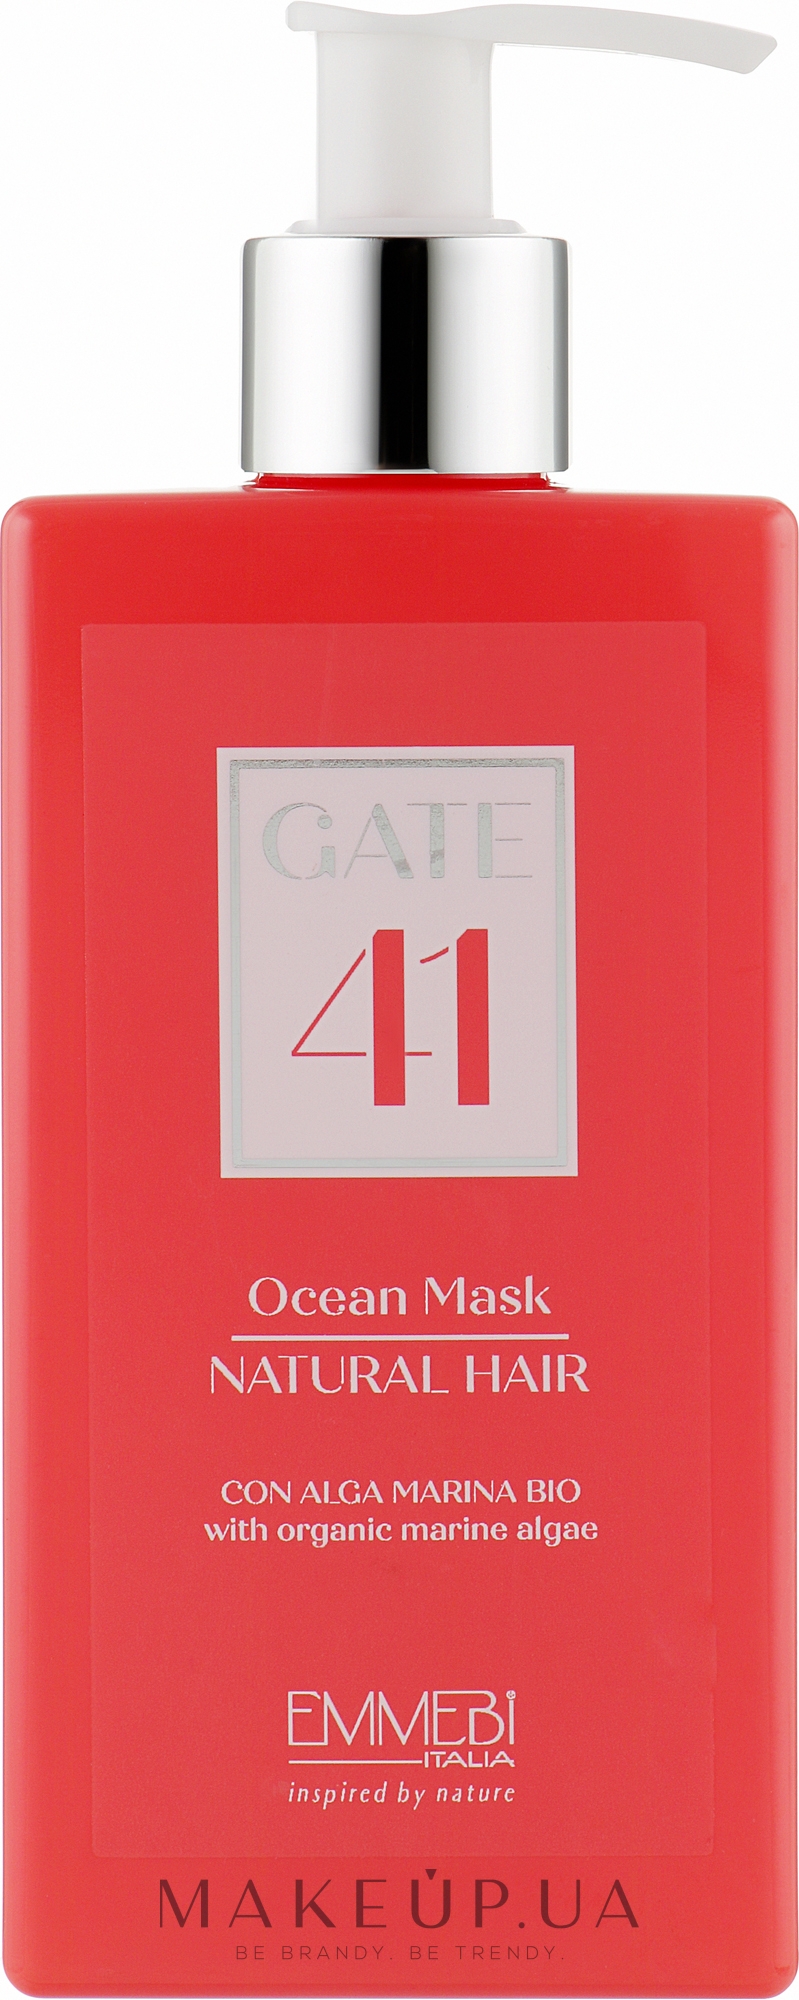 Маска для натурального волосся - Emmebi Italia Gate 41 Wash Ocean Mask Natural Hair — фото 200ml